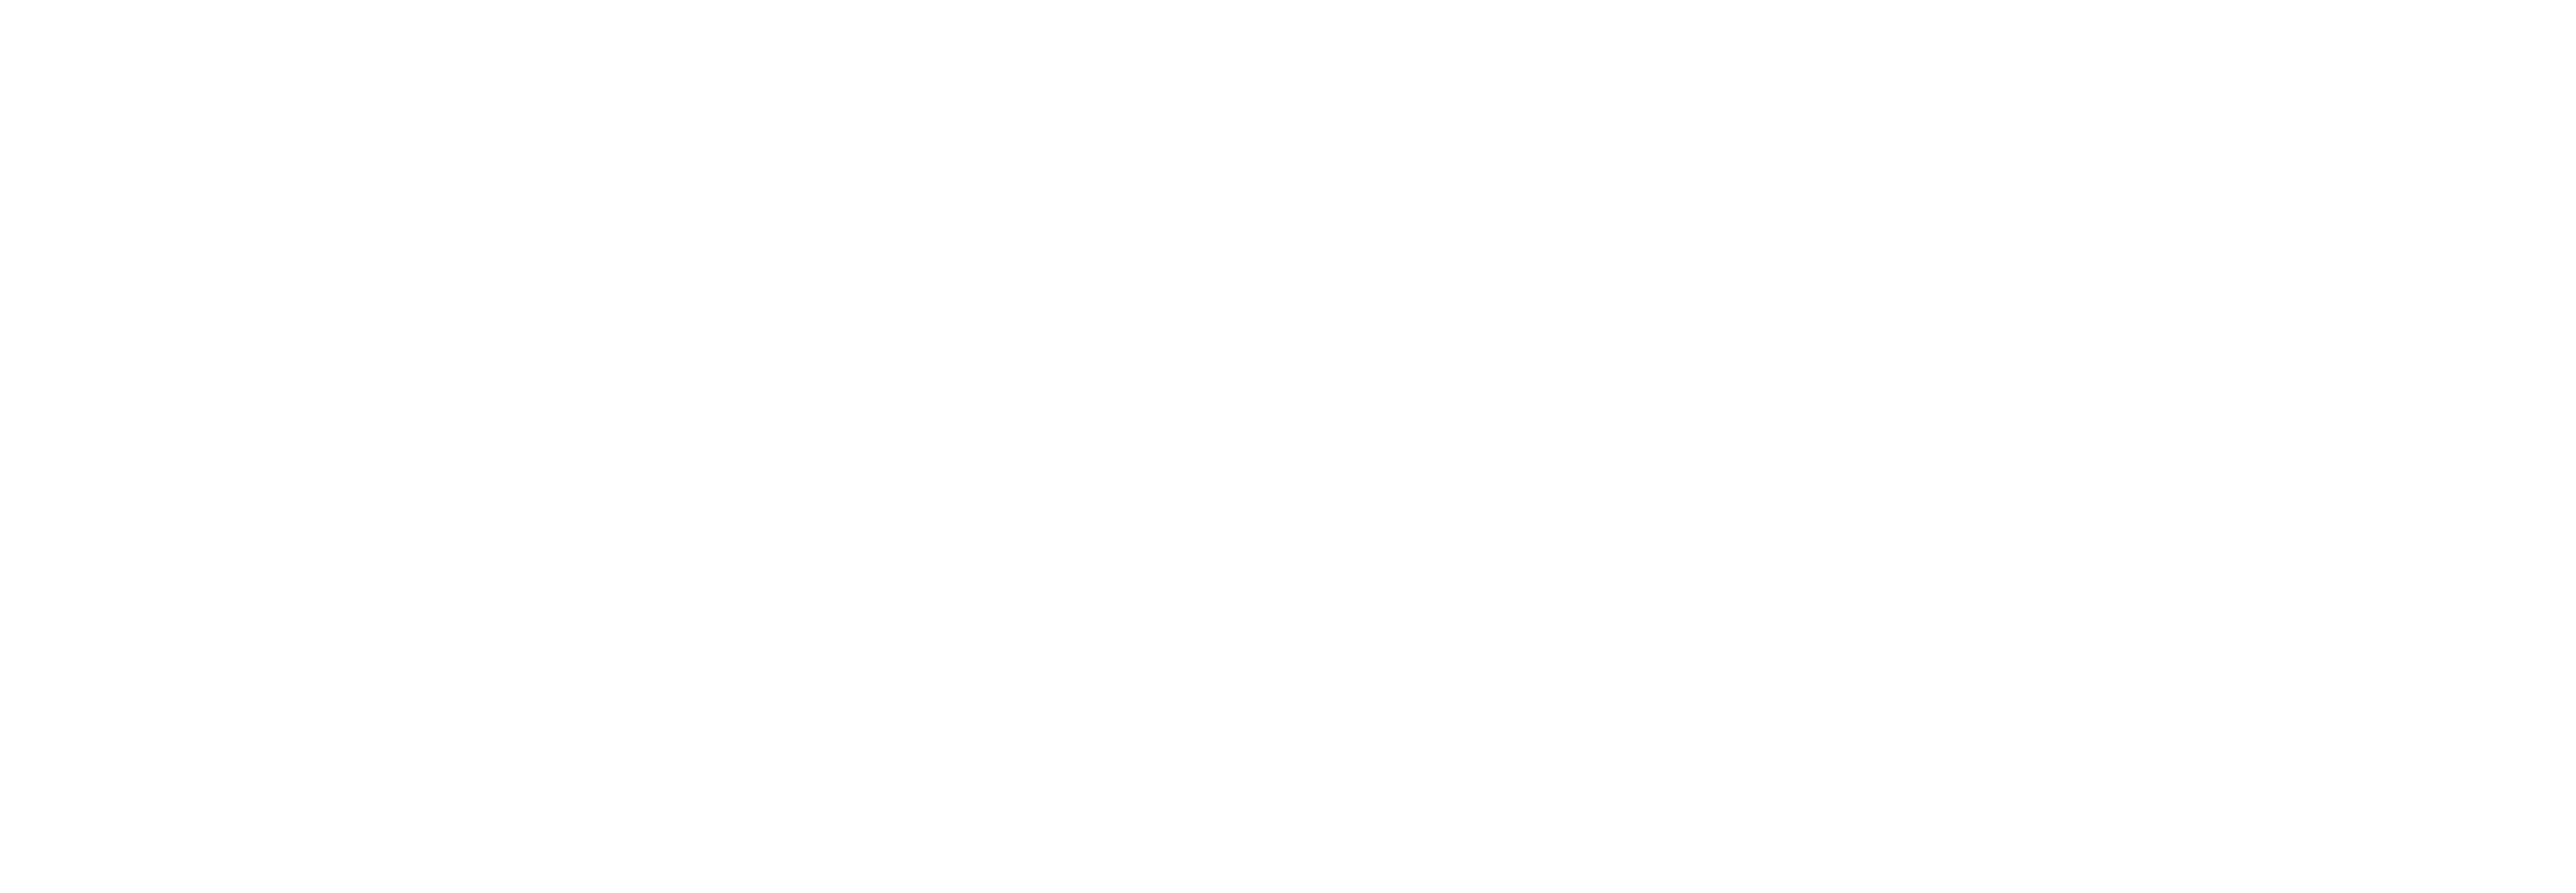 St. Charles Hospital